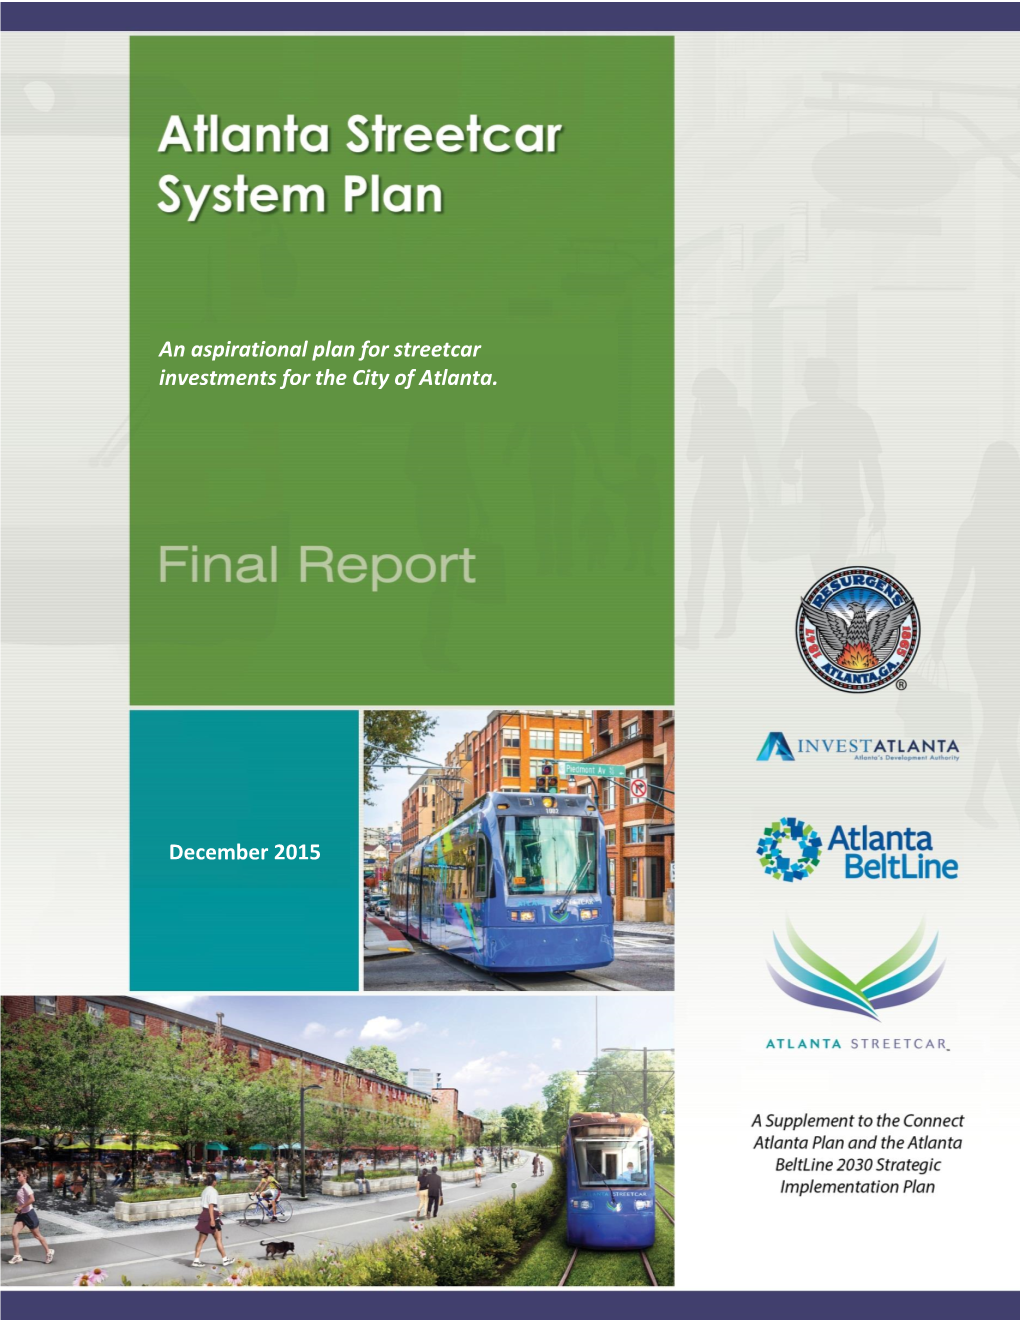 Atlanta Beltline/Atlanta Streetcar System Plan